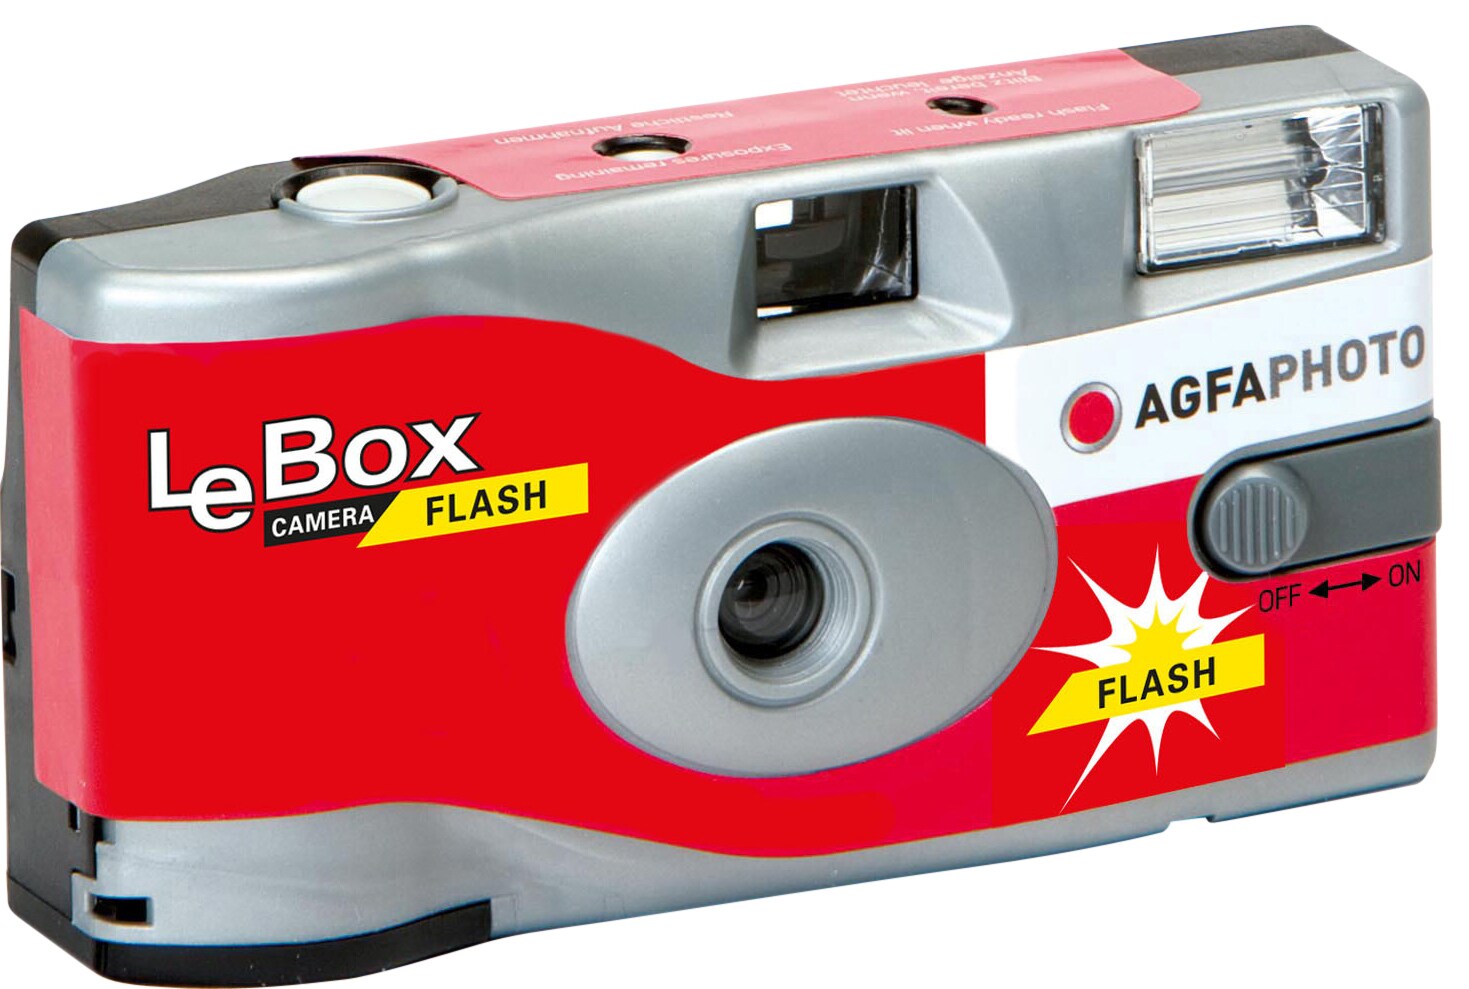 Agfaphoto LeBox Flash analogt engangkamera - Elkjøp